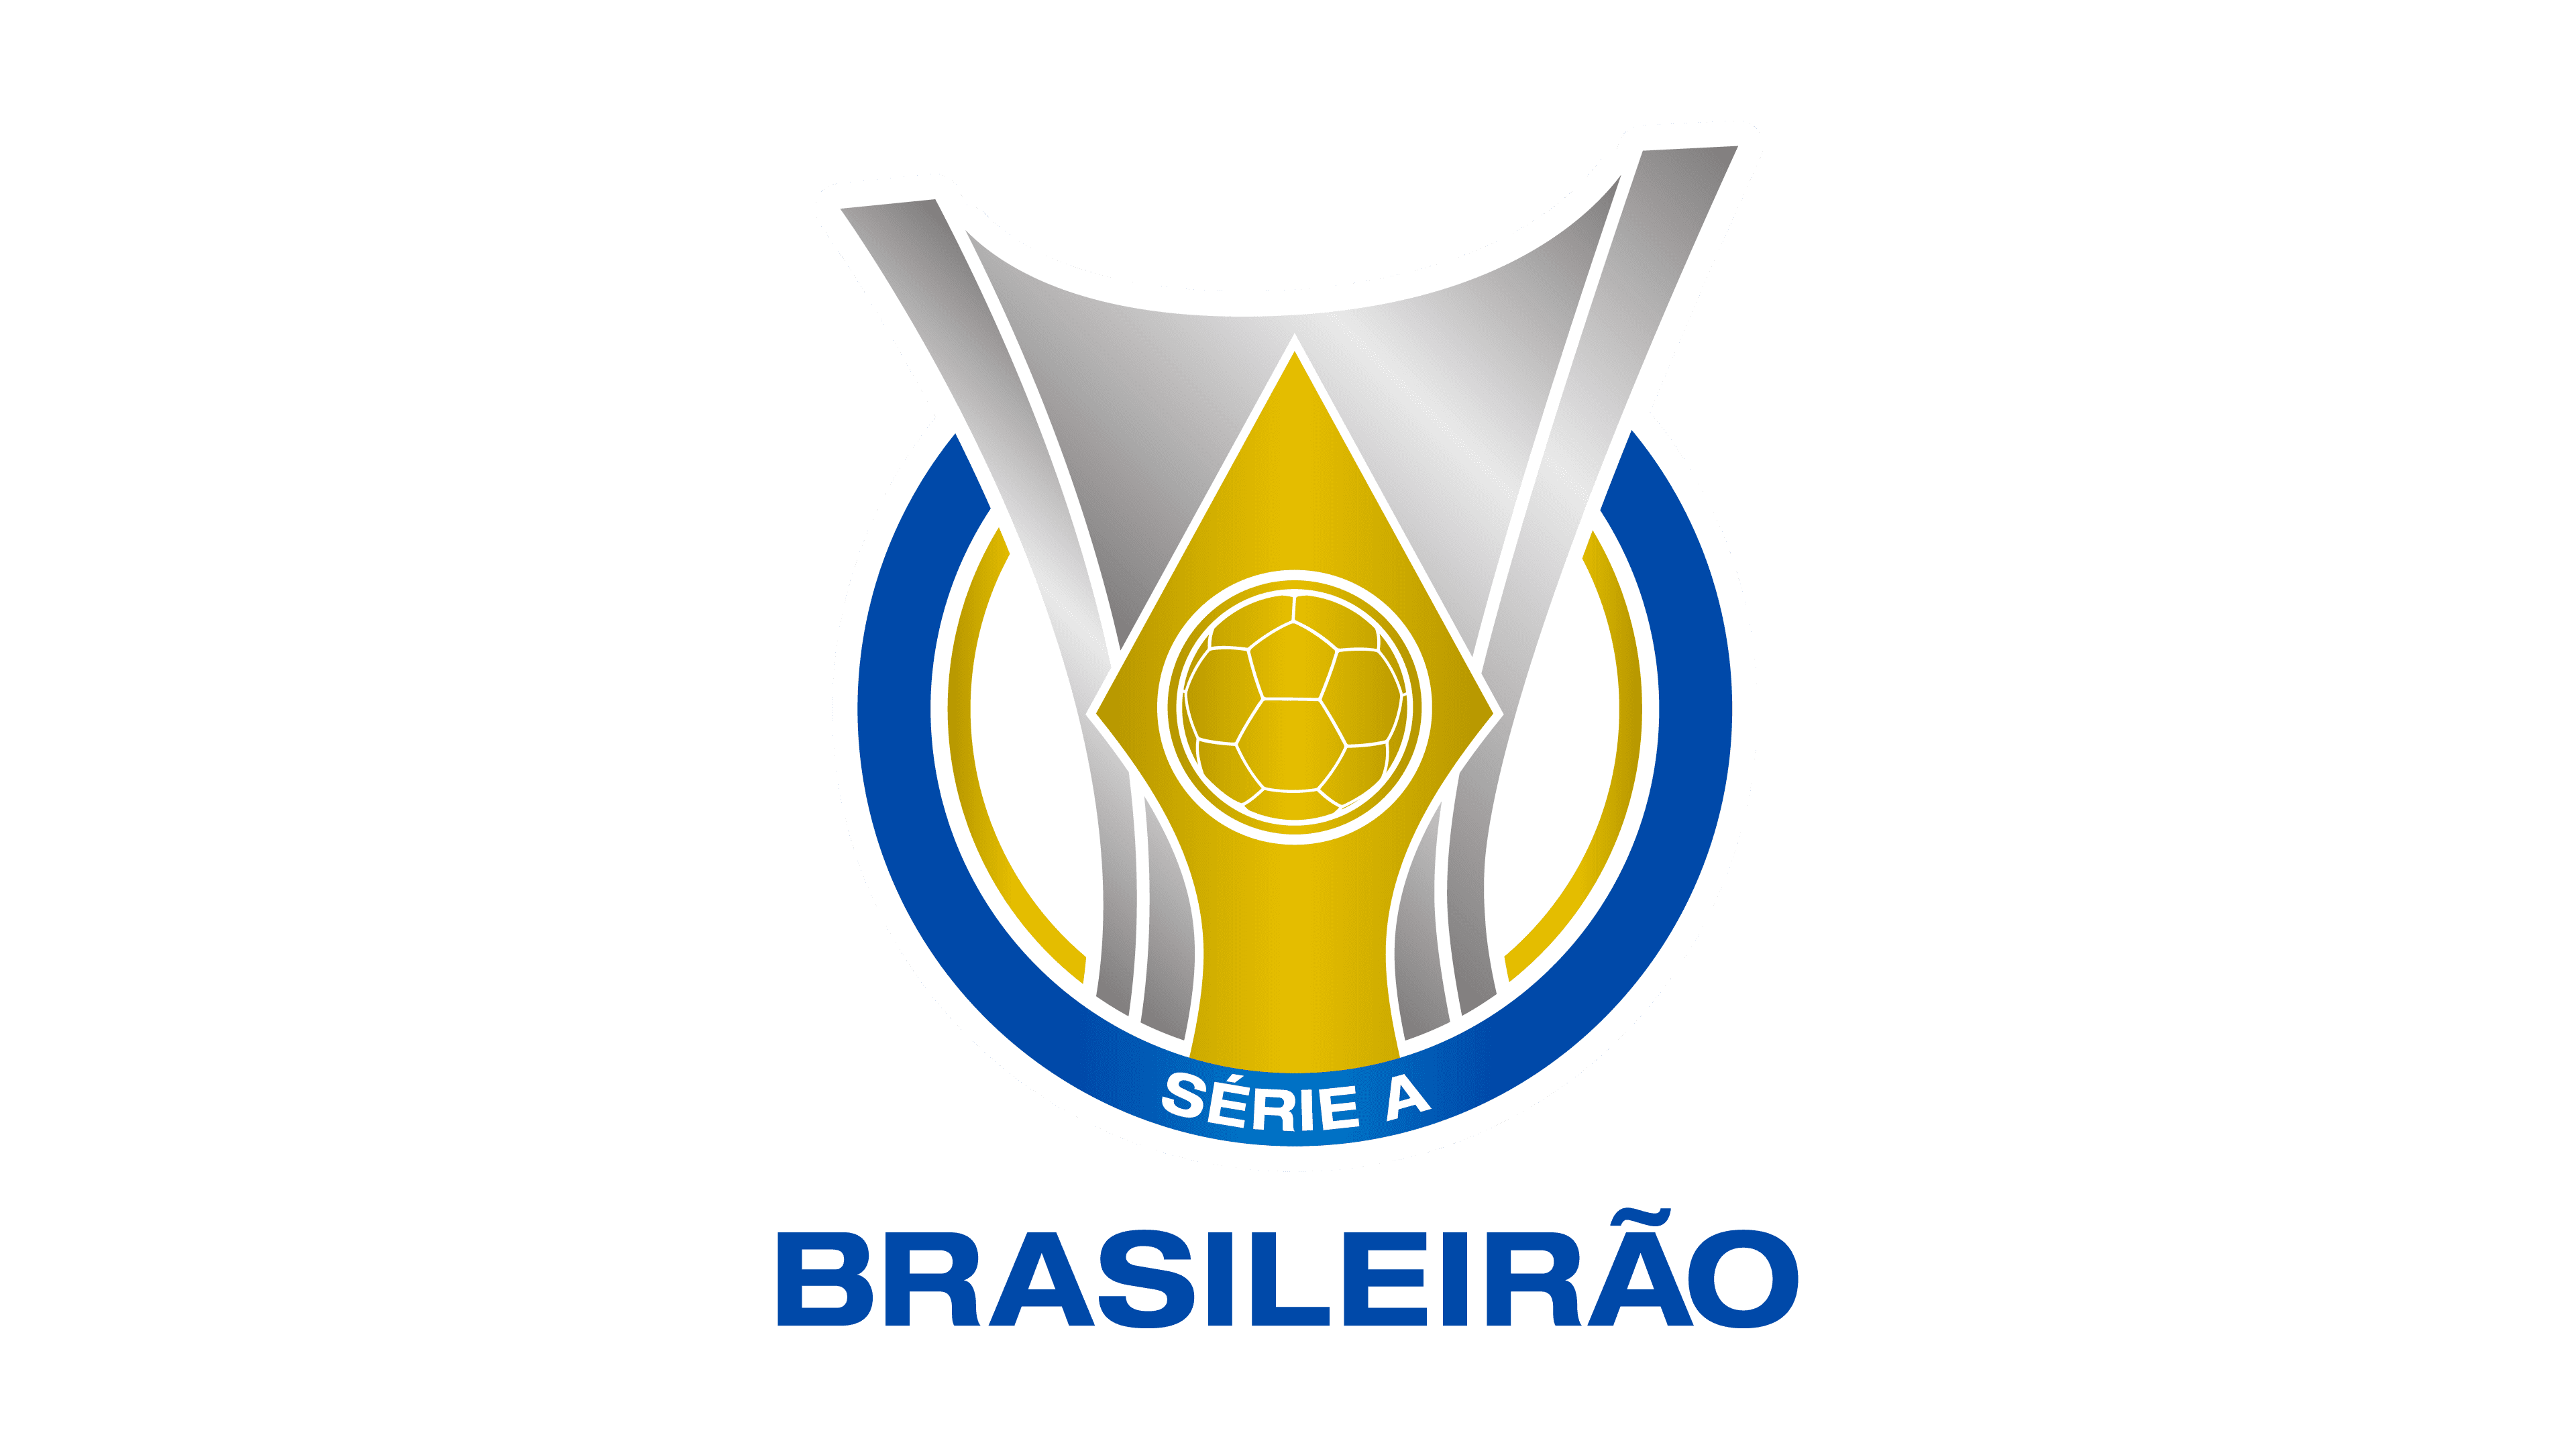 Campeonato Brasileiro Série A - Wikipedia